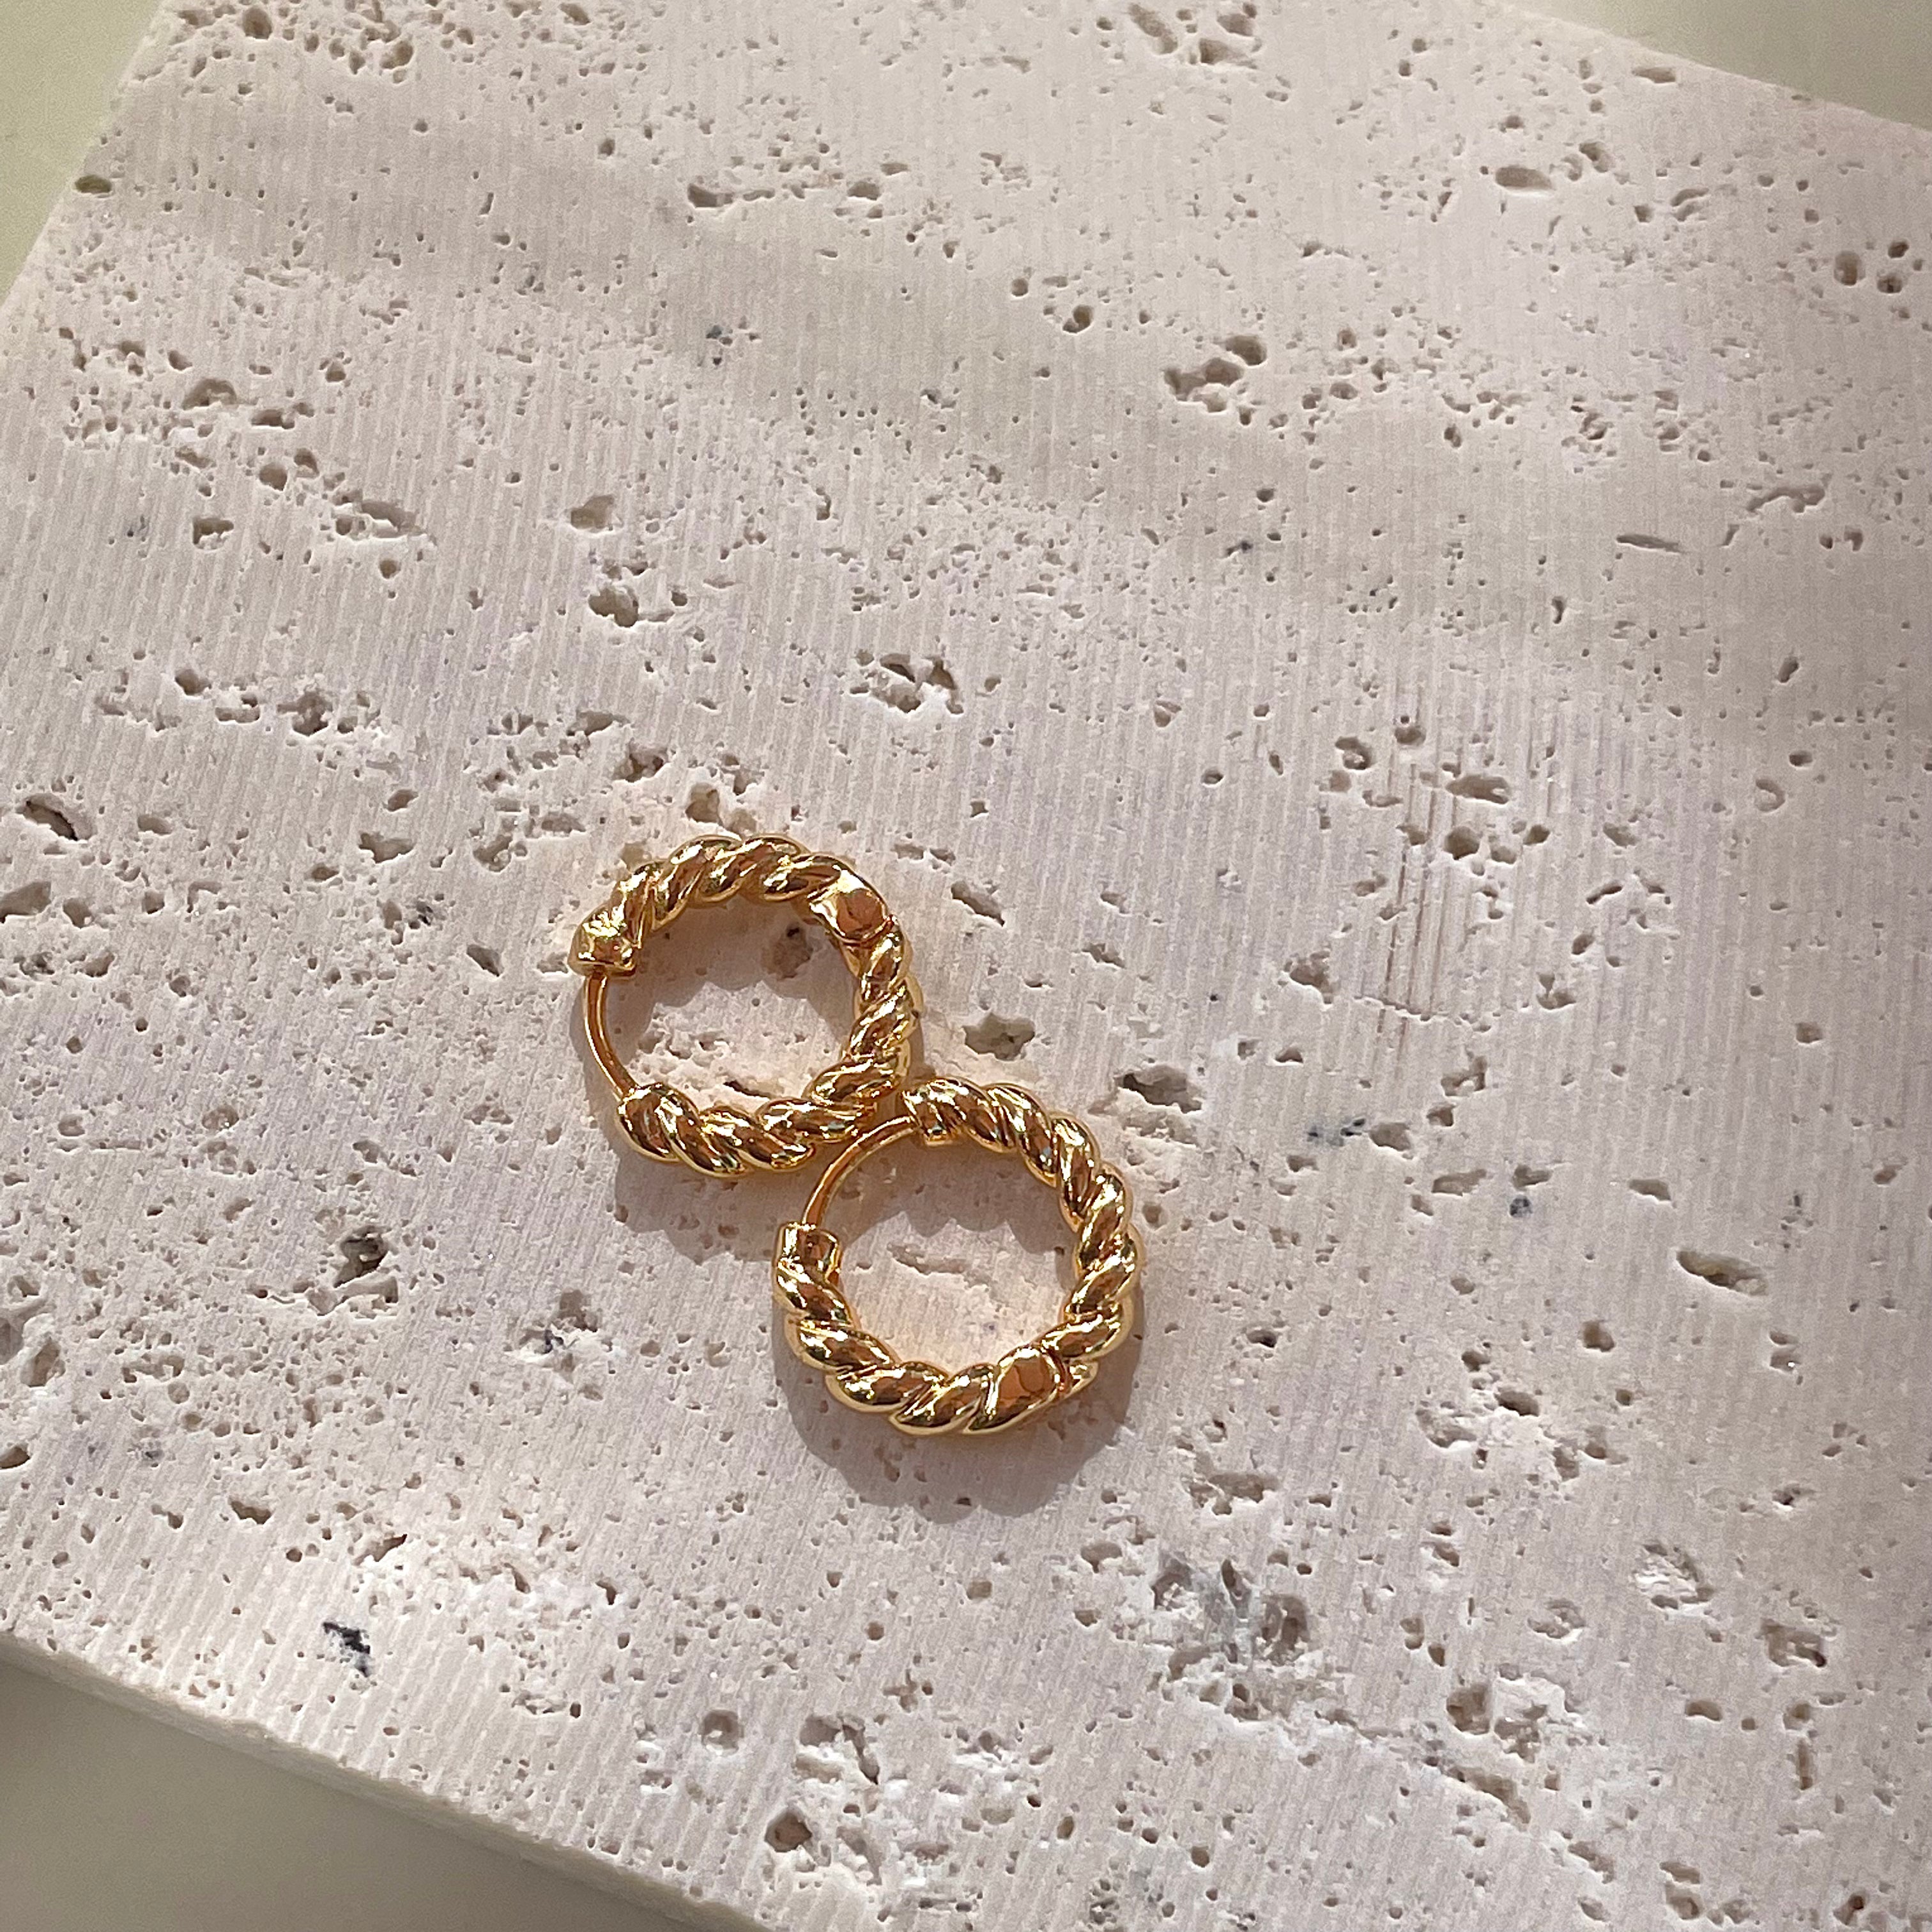 Speckle Stud Earrings - minimalist dappled circle post earrings nickel free  – Foamy Wader